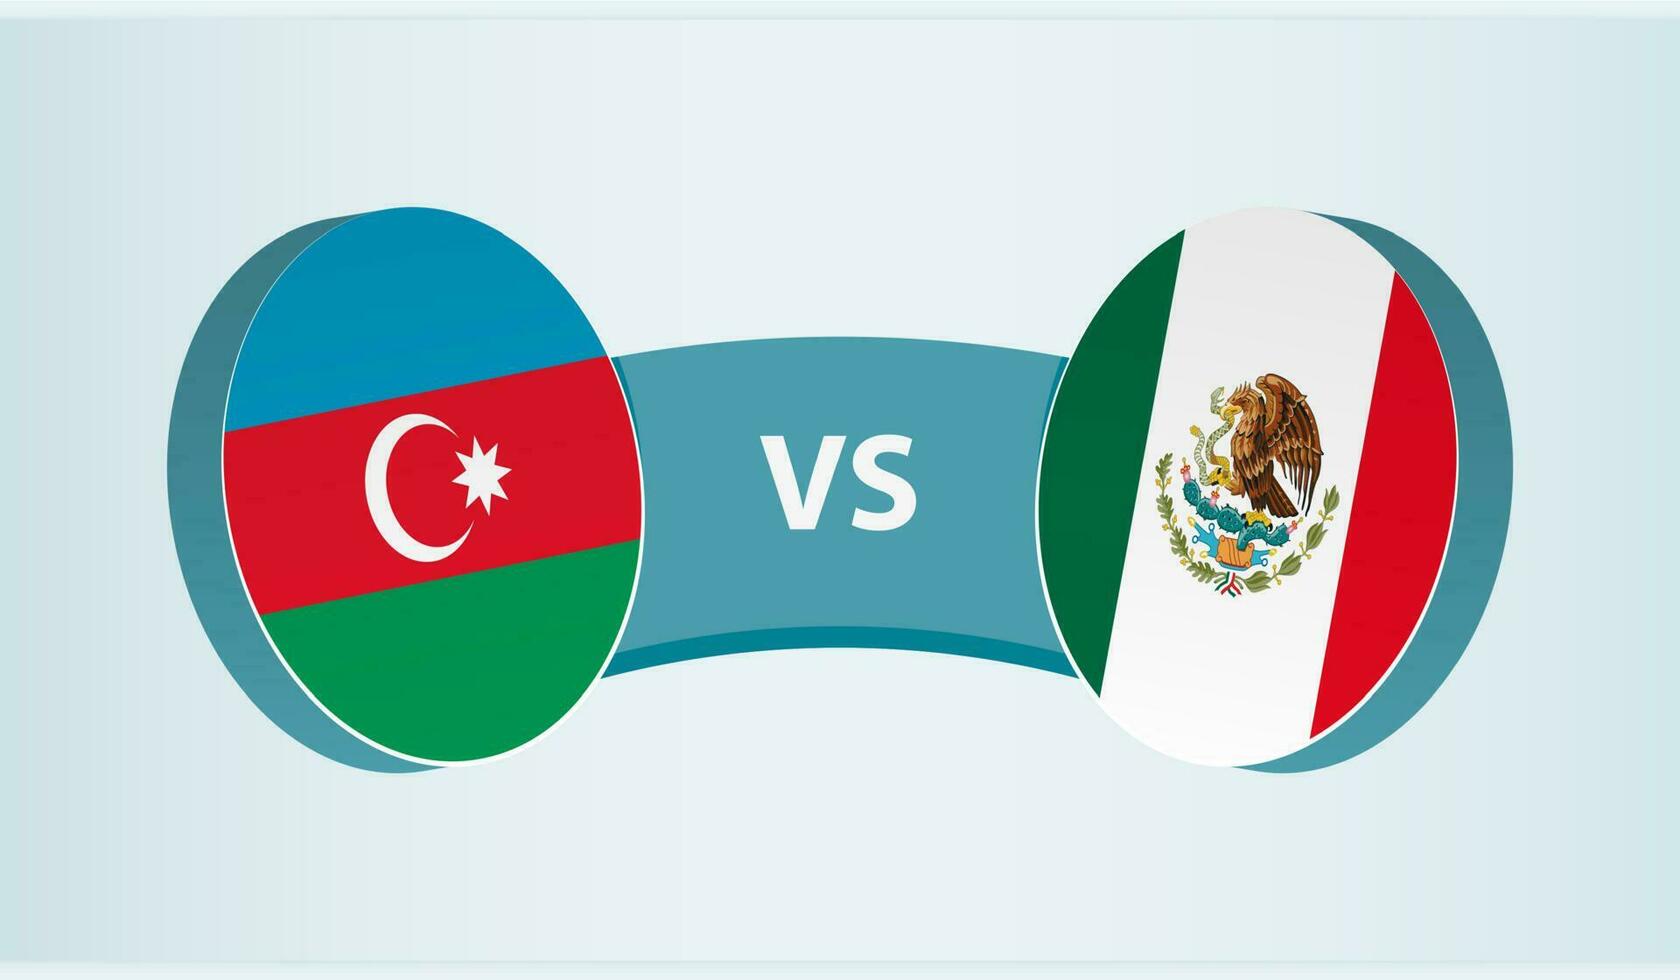 Azerbaijan versus Mexico, team sports competition concept. vector